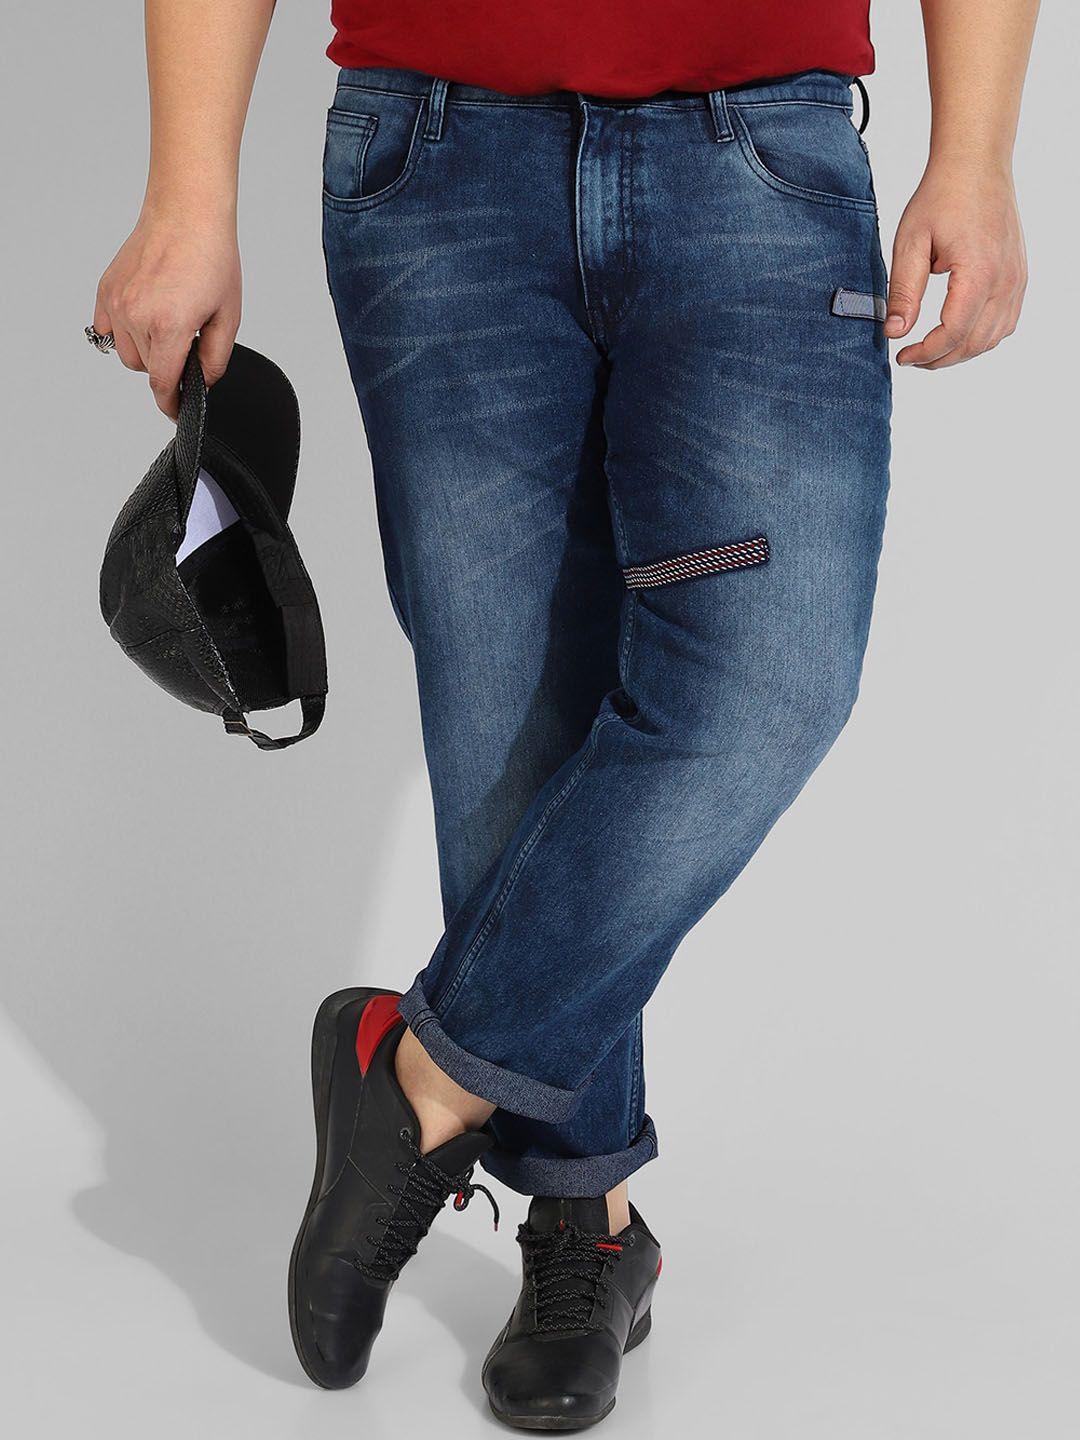 instafab-plus-men-plus-size-relaxed-fit-light-fade-cotton-stretchable-jeans